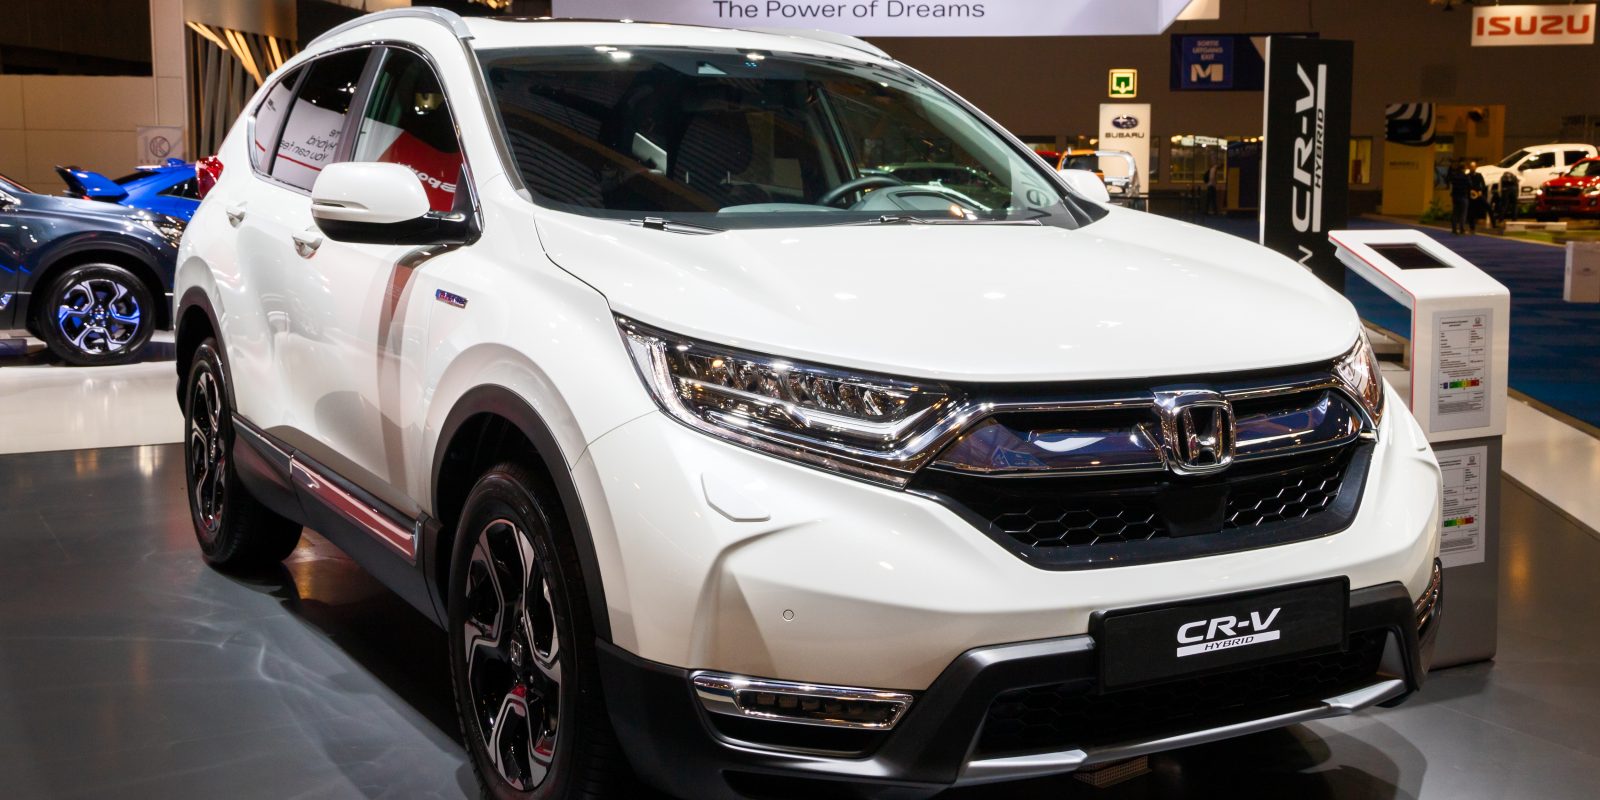 Honda CR-V hybrid car showcased at the Brussels Autosalon Motor Show. Belgium - January 18, 2019.